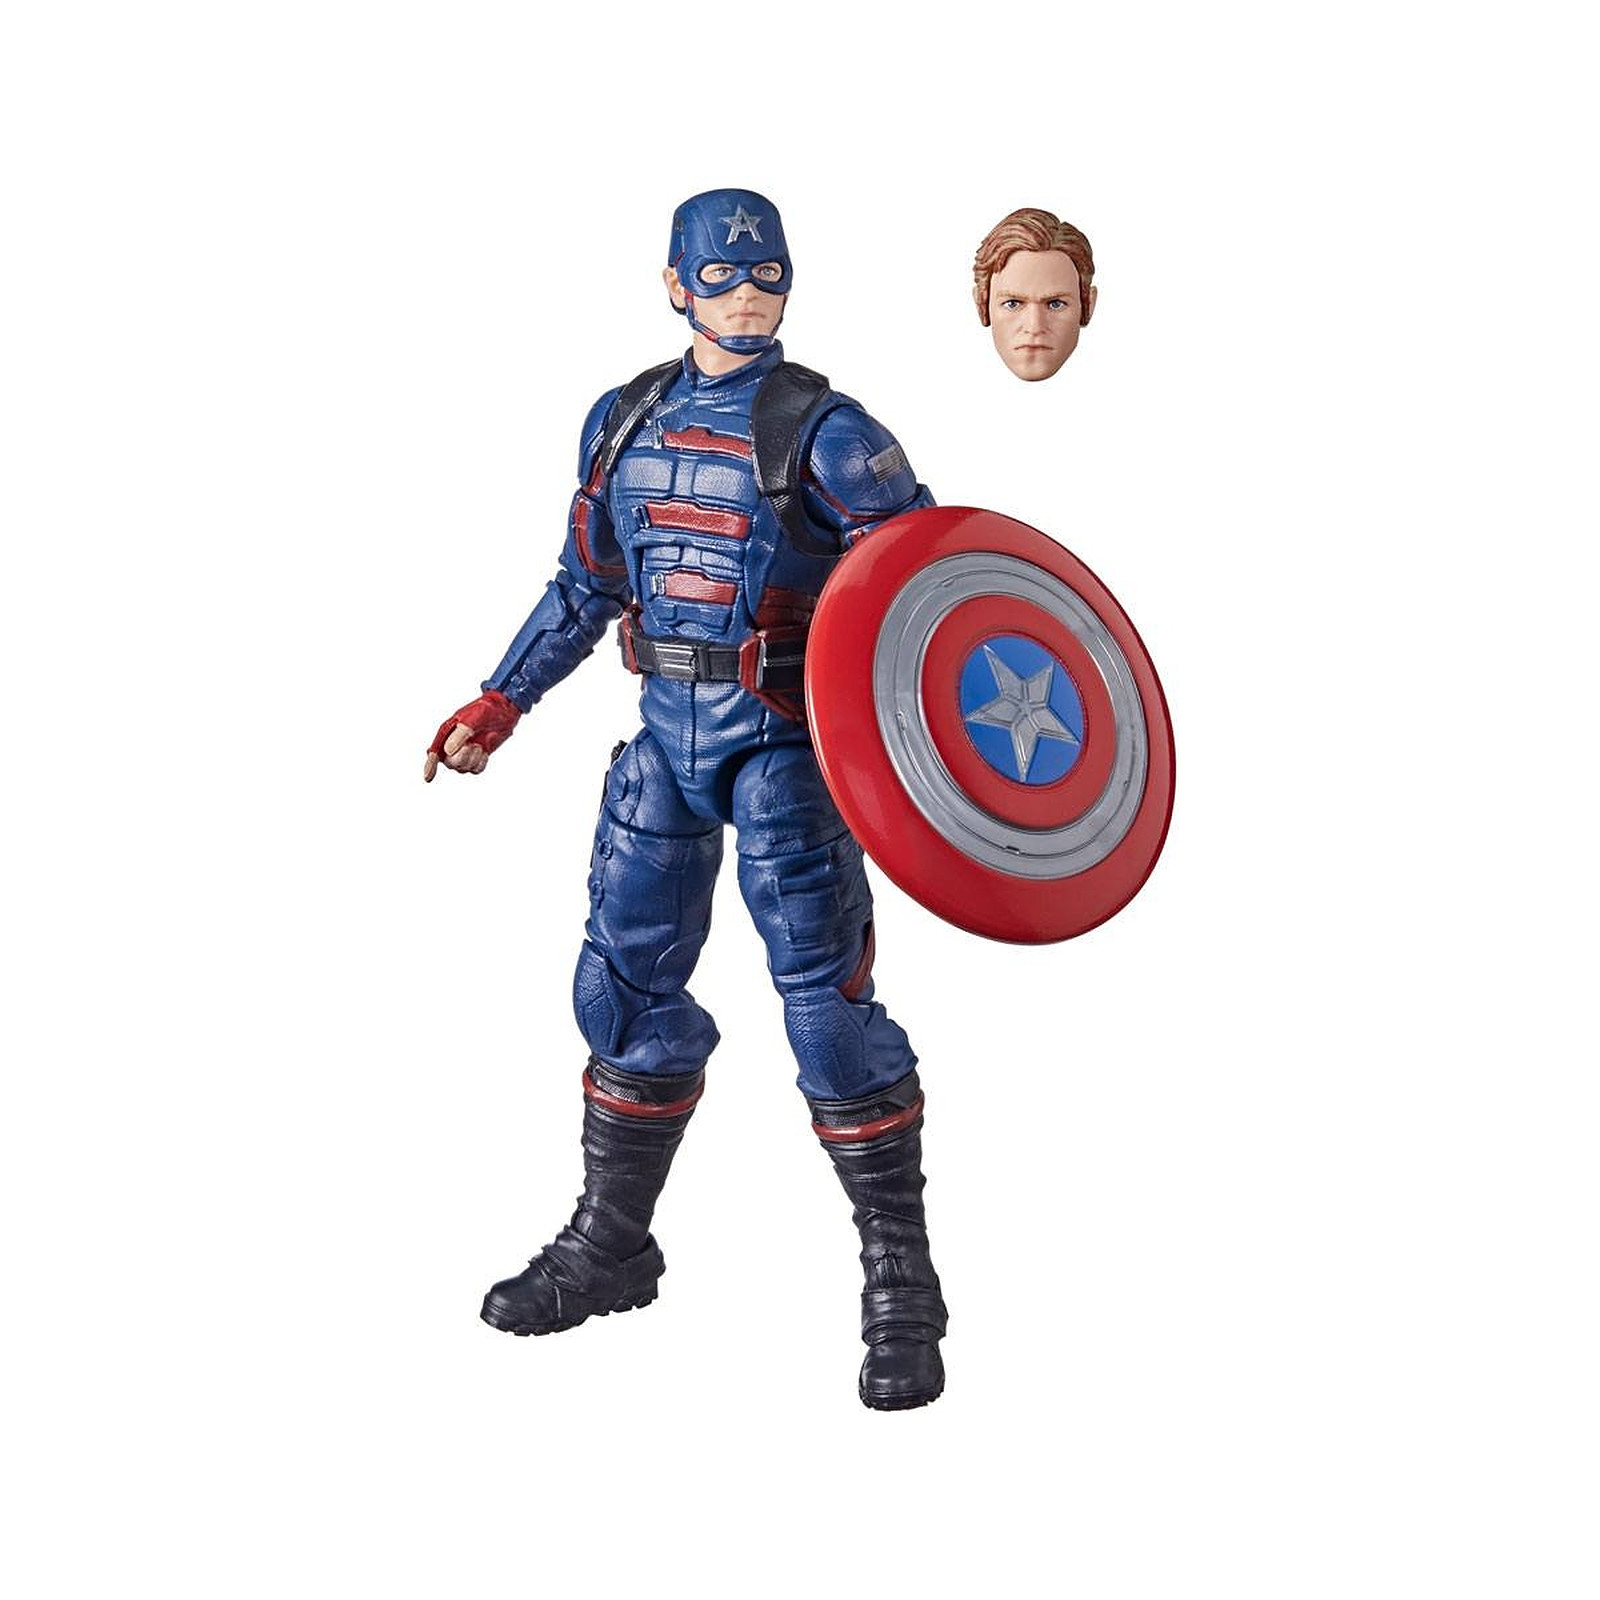 Falcon et le Soldat de l'Hiver - Figurine 2021 Captain America (John F. Walker) 15 cm - Figurines Hasbro